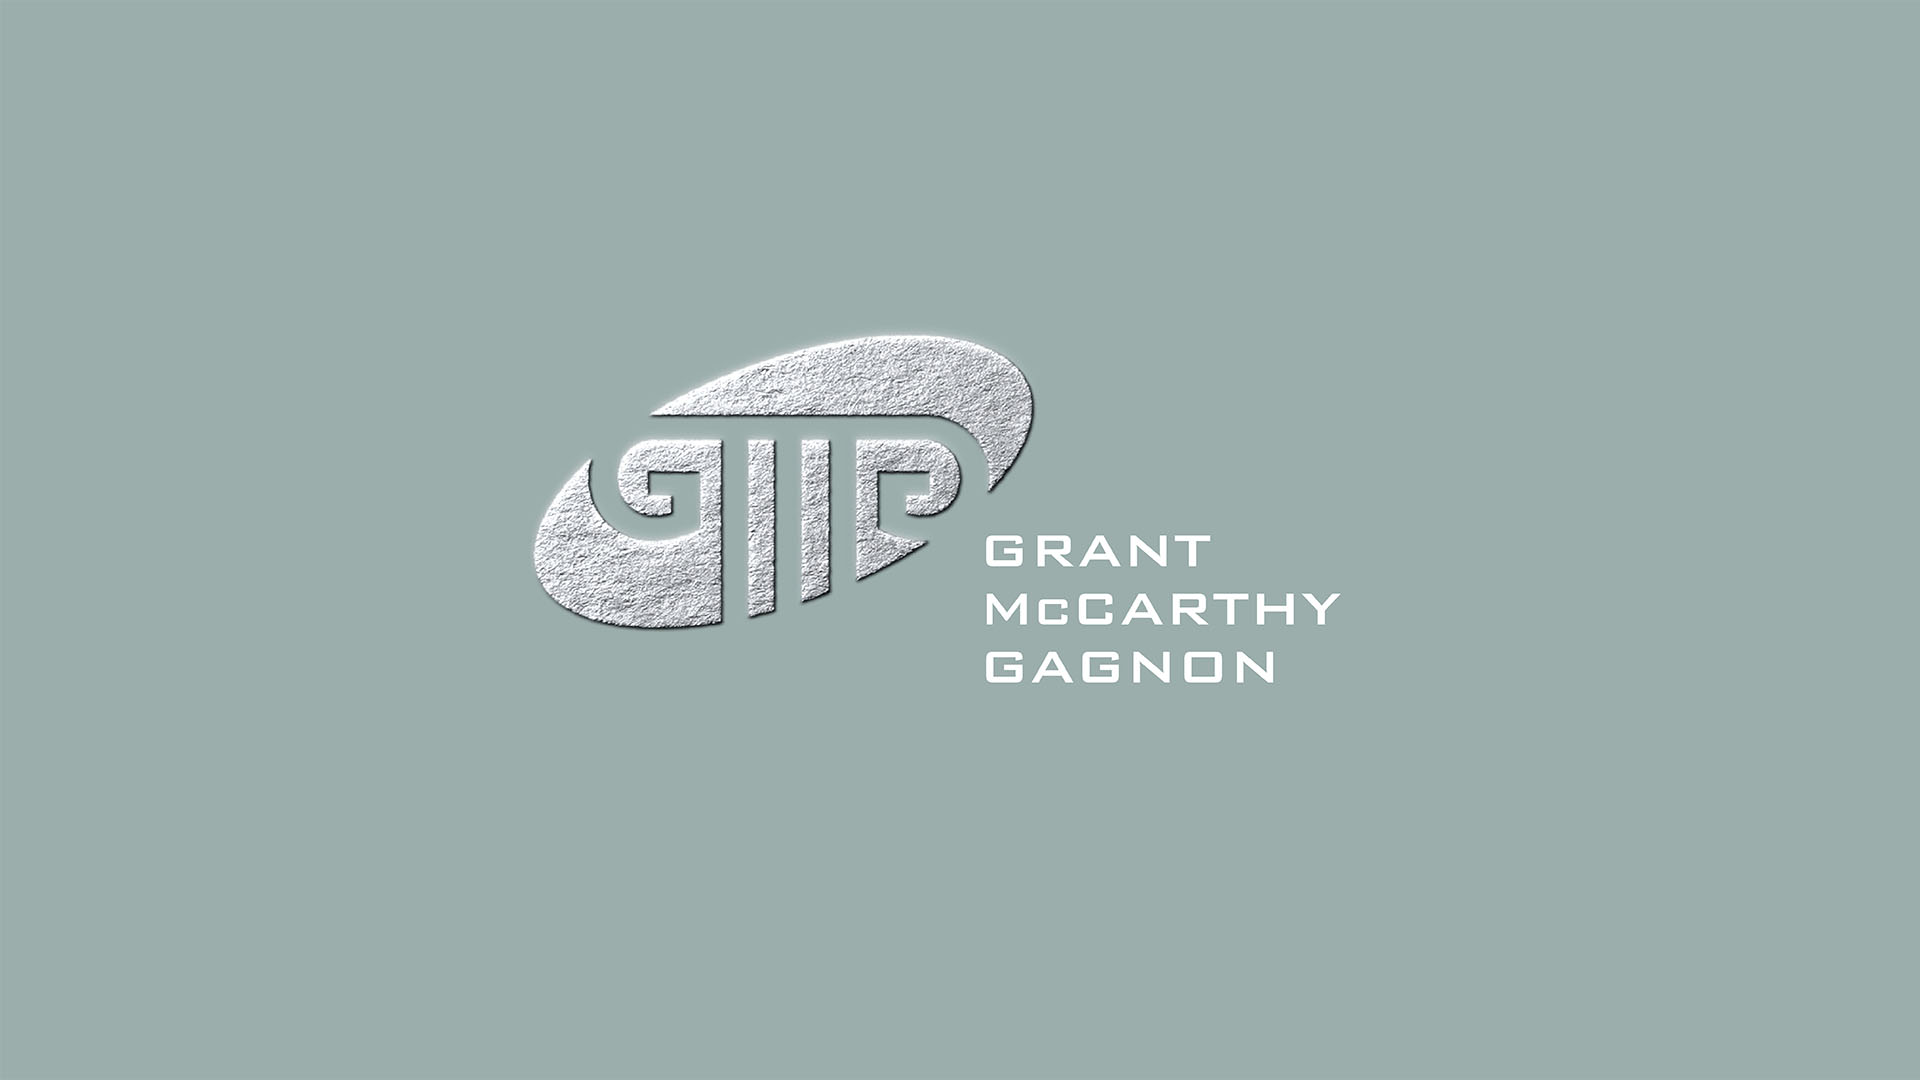 grant mccarthy gagnon silver embosses logo on blue